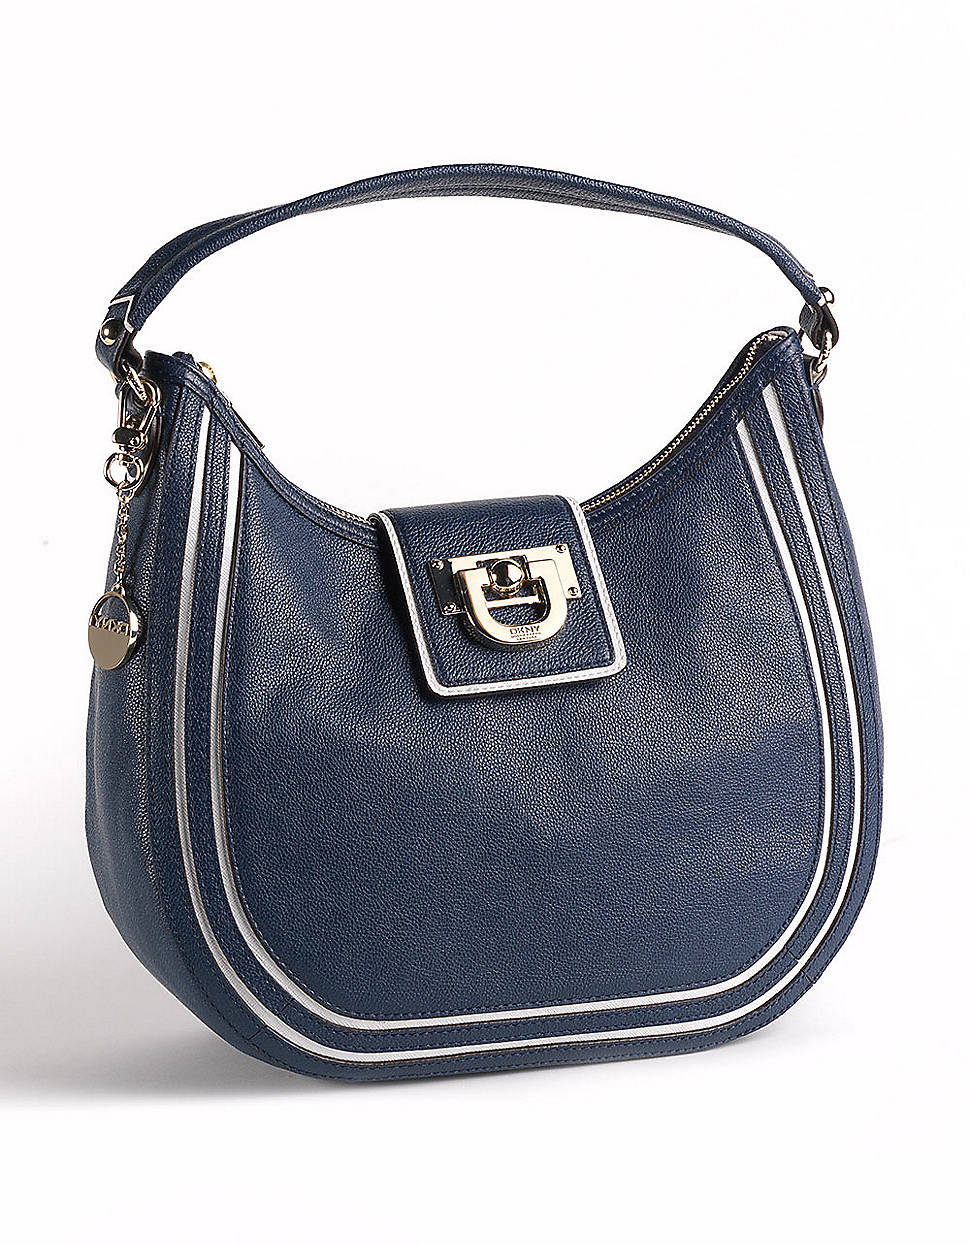 DKNY Heritage Vintage Leather Hobo Bag in Blue - Lyst